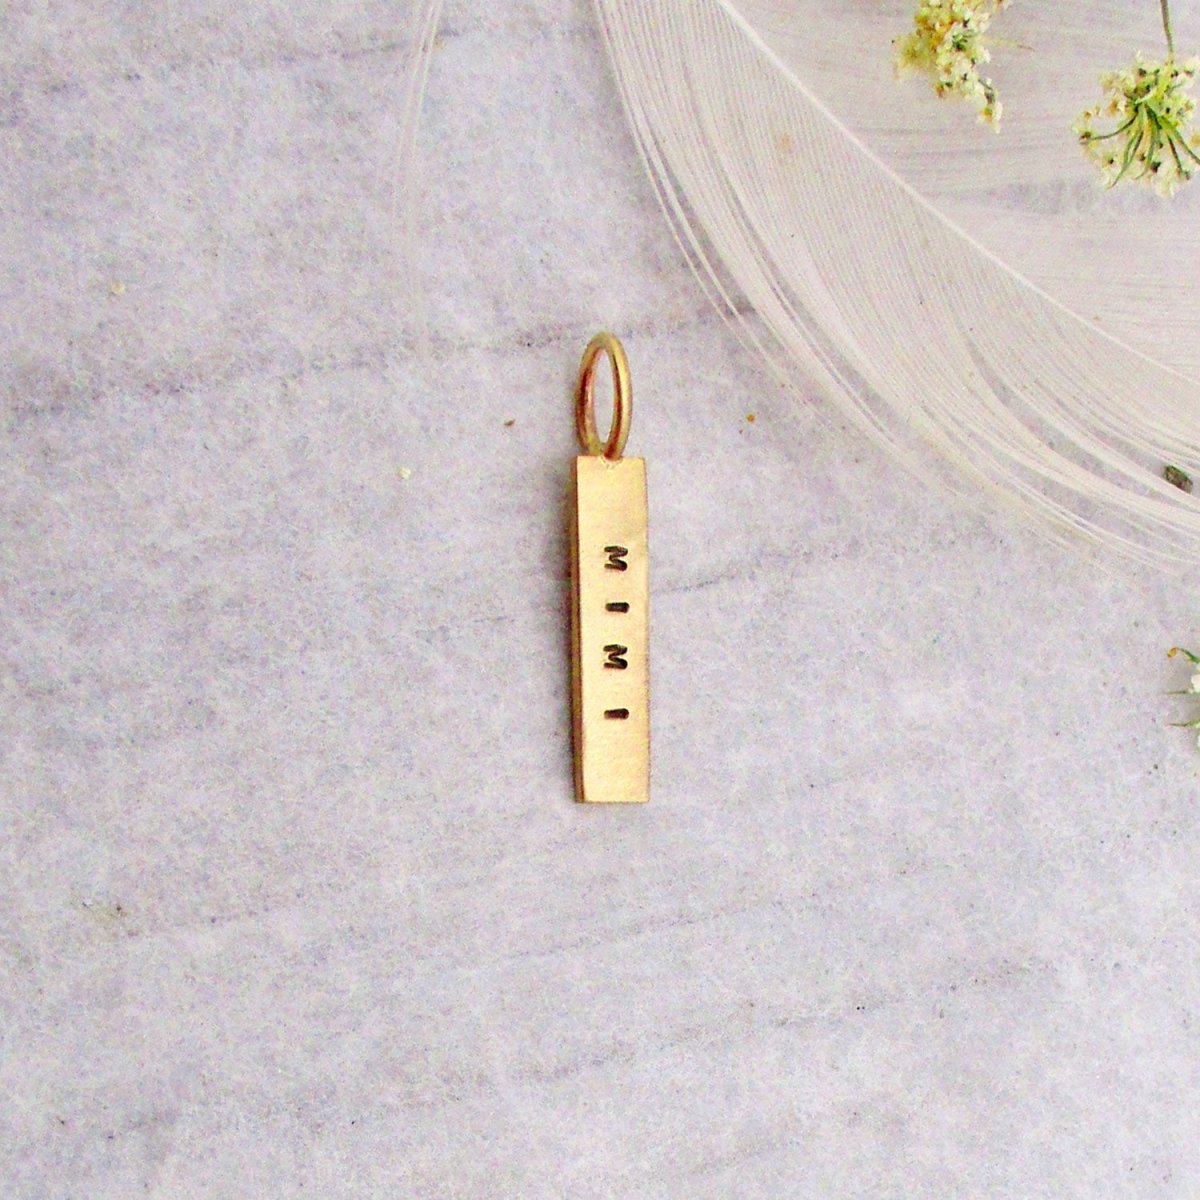 Tiny 14 Karat Gold Rectangle Tag Charm - Luxe Design Jewellery